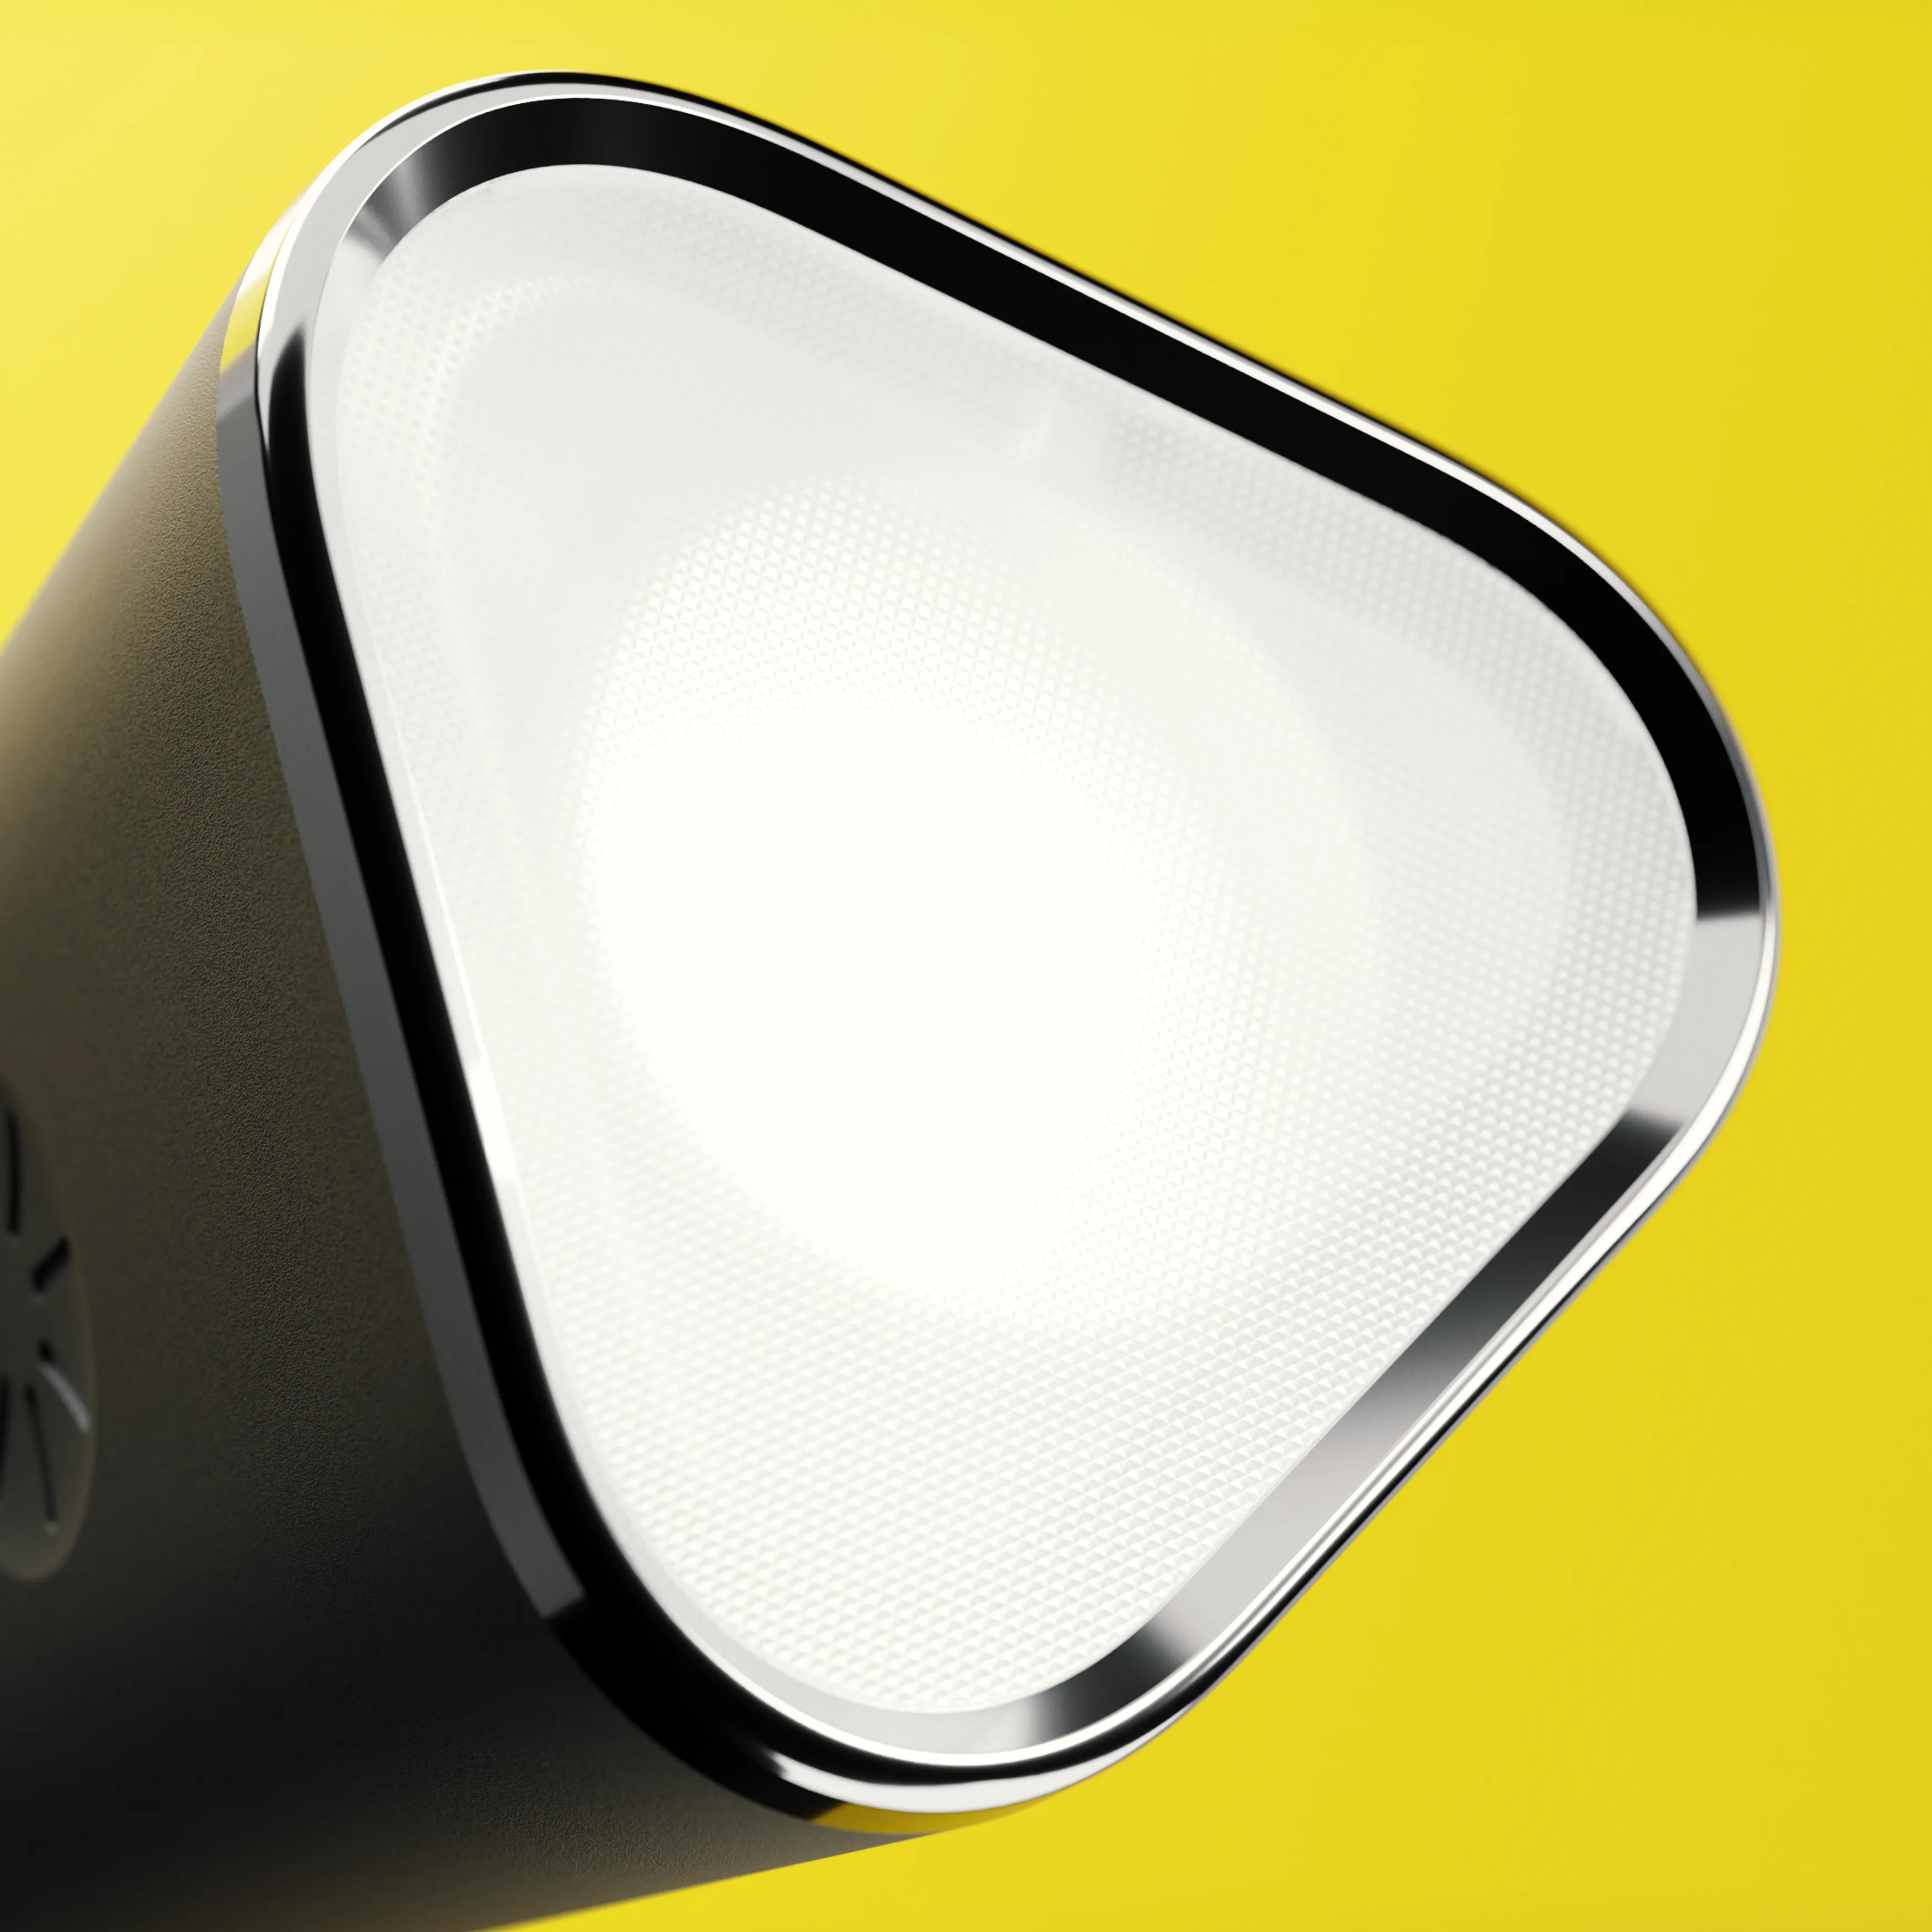 An detail view of an osram LED flashlight